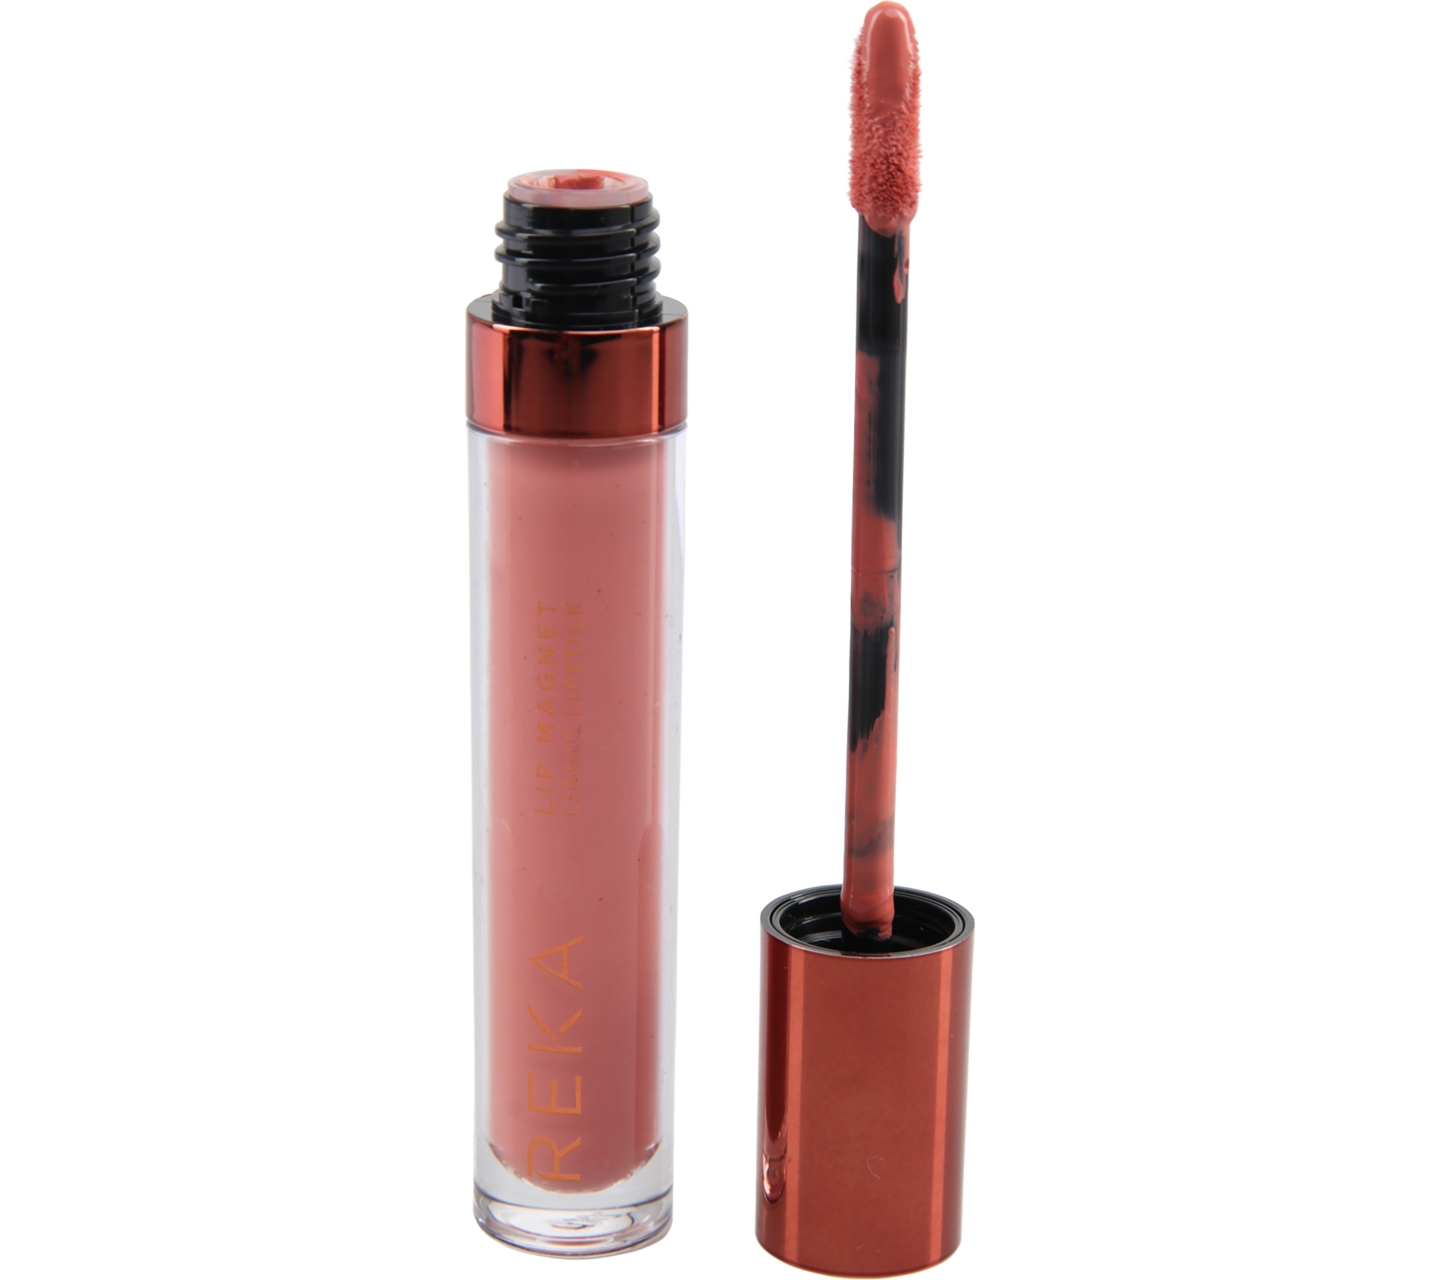 REKA Lip Magnet Liquid Lipstick - Weekender Lips